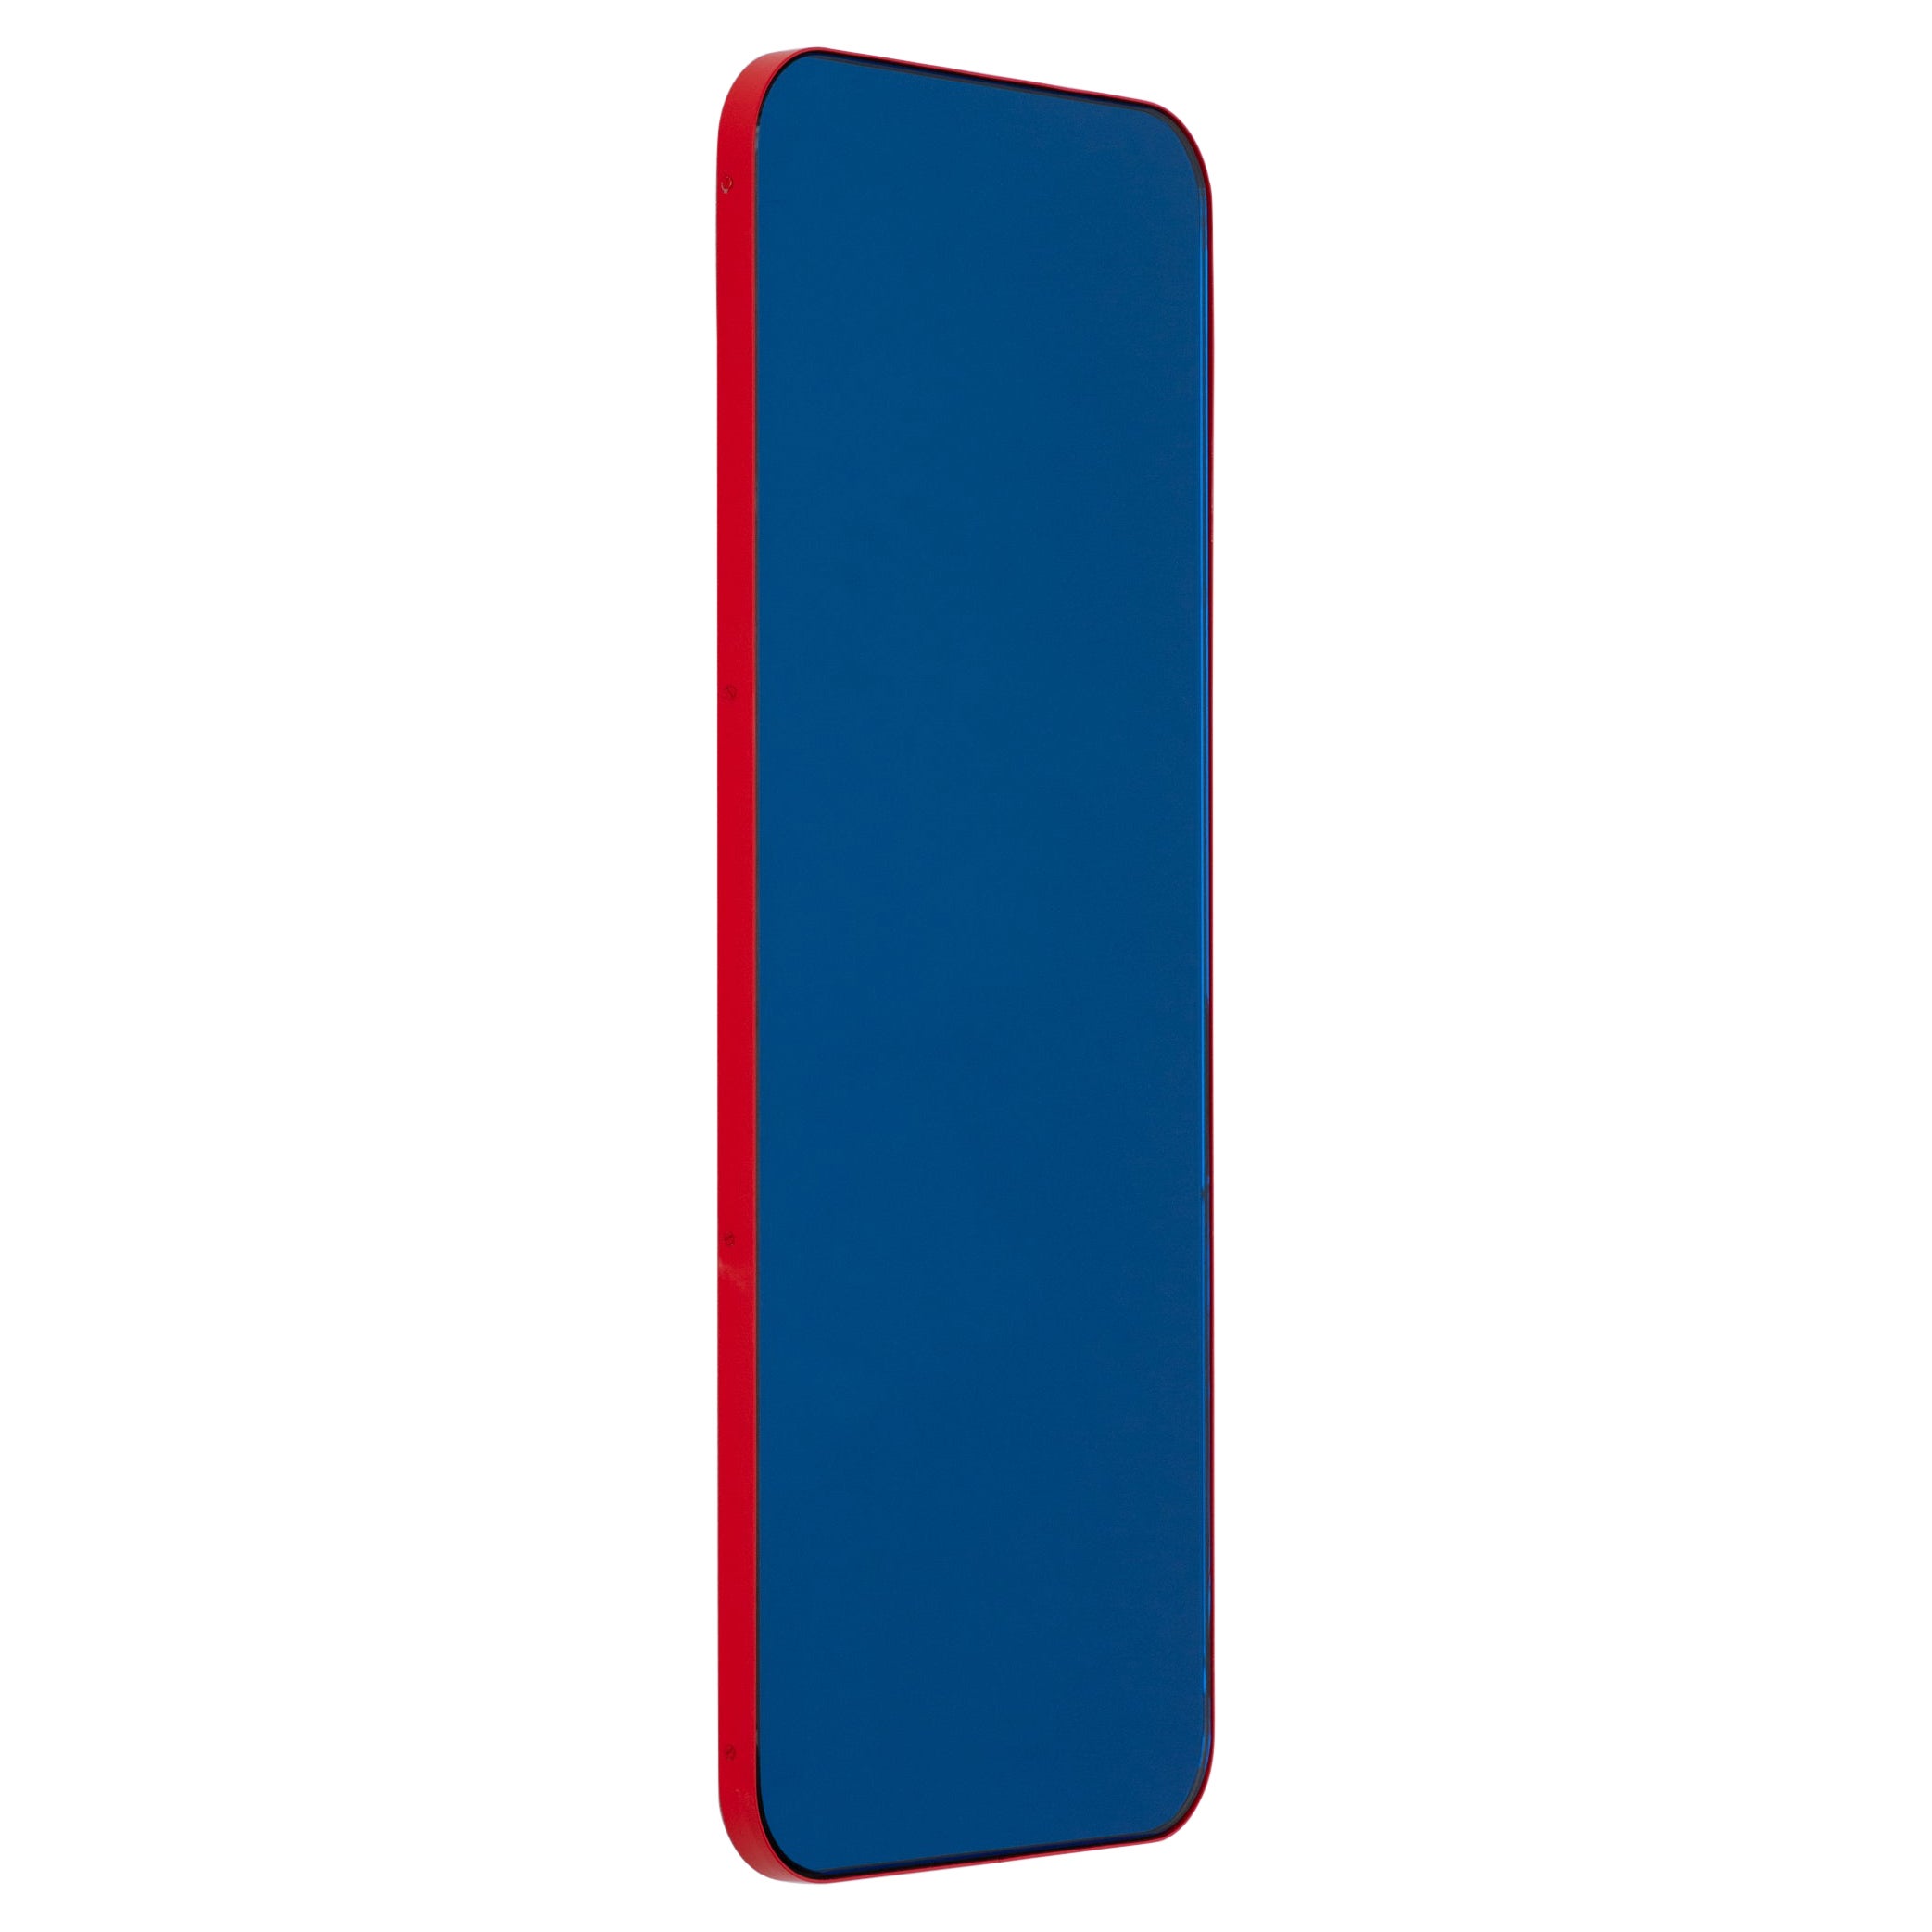 Quadris Rectangular Blue Mirror with a Modern Red Frame, Medium For Sale